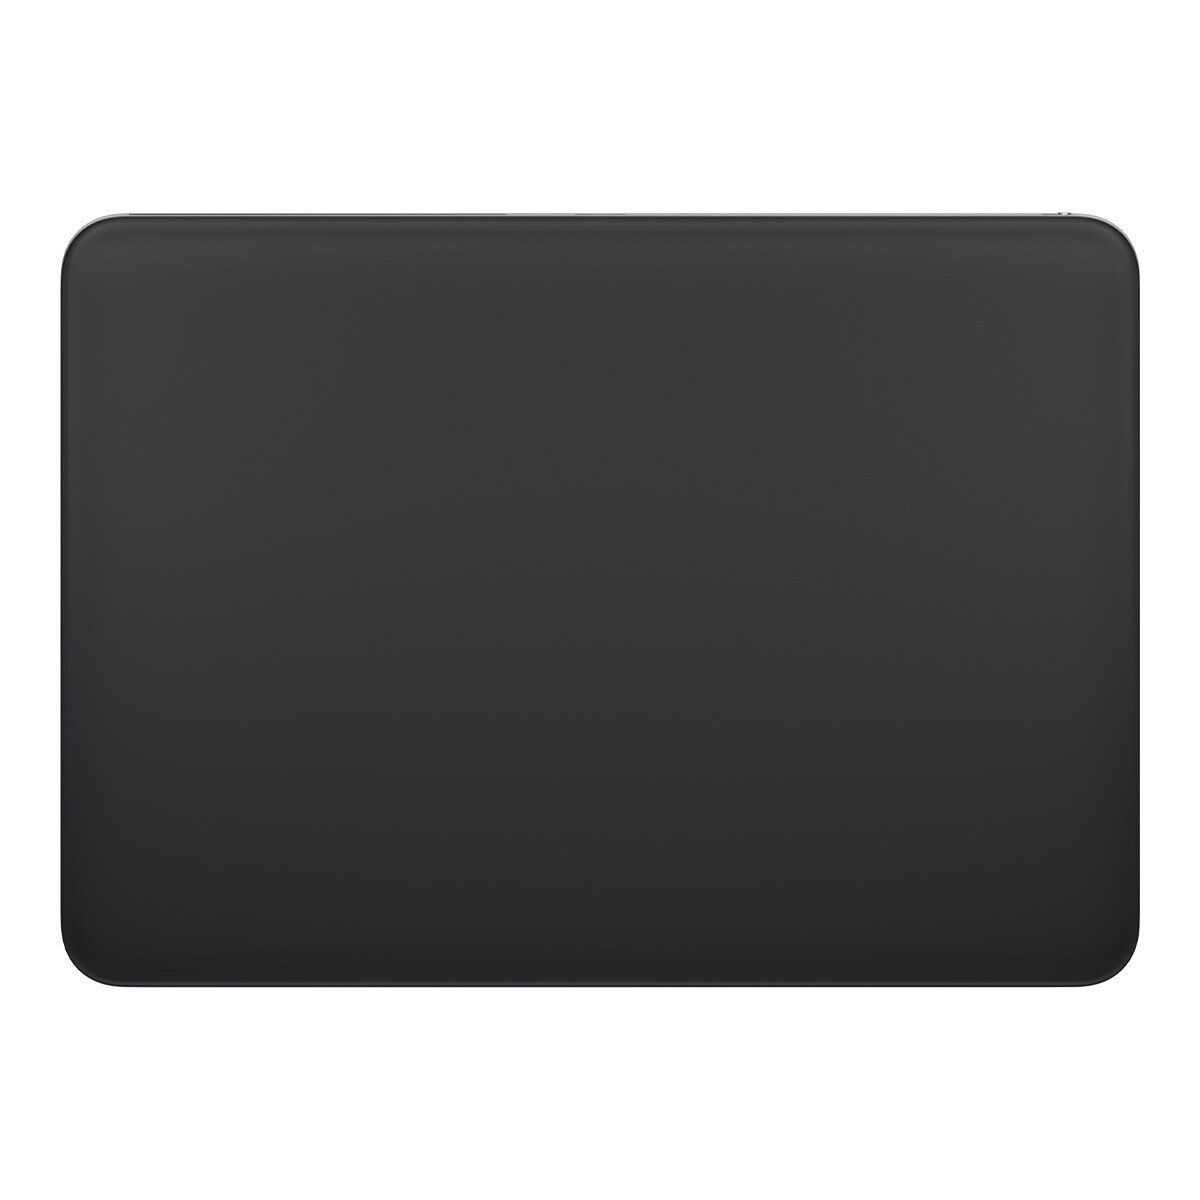 Apple 巧控板 黑色多點觸控表面